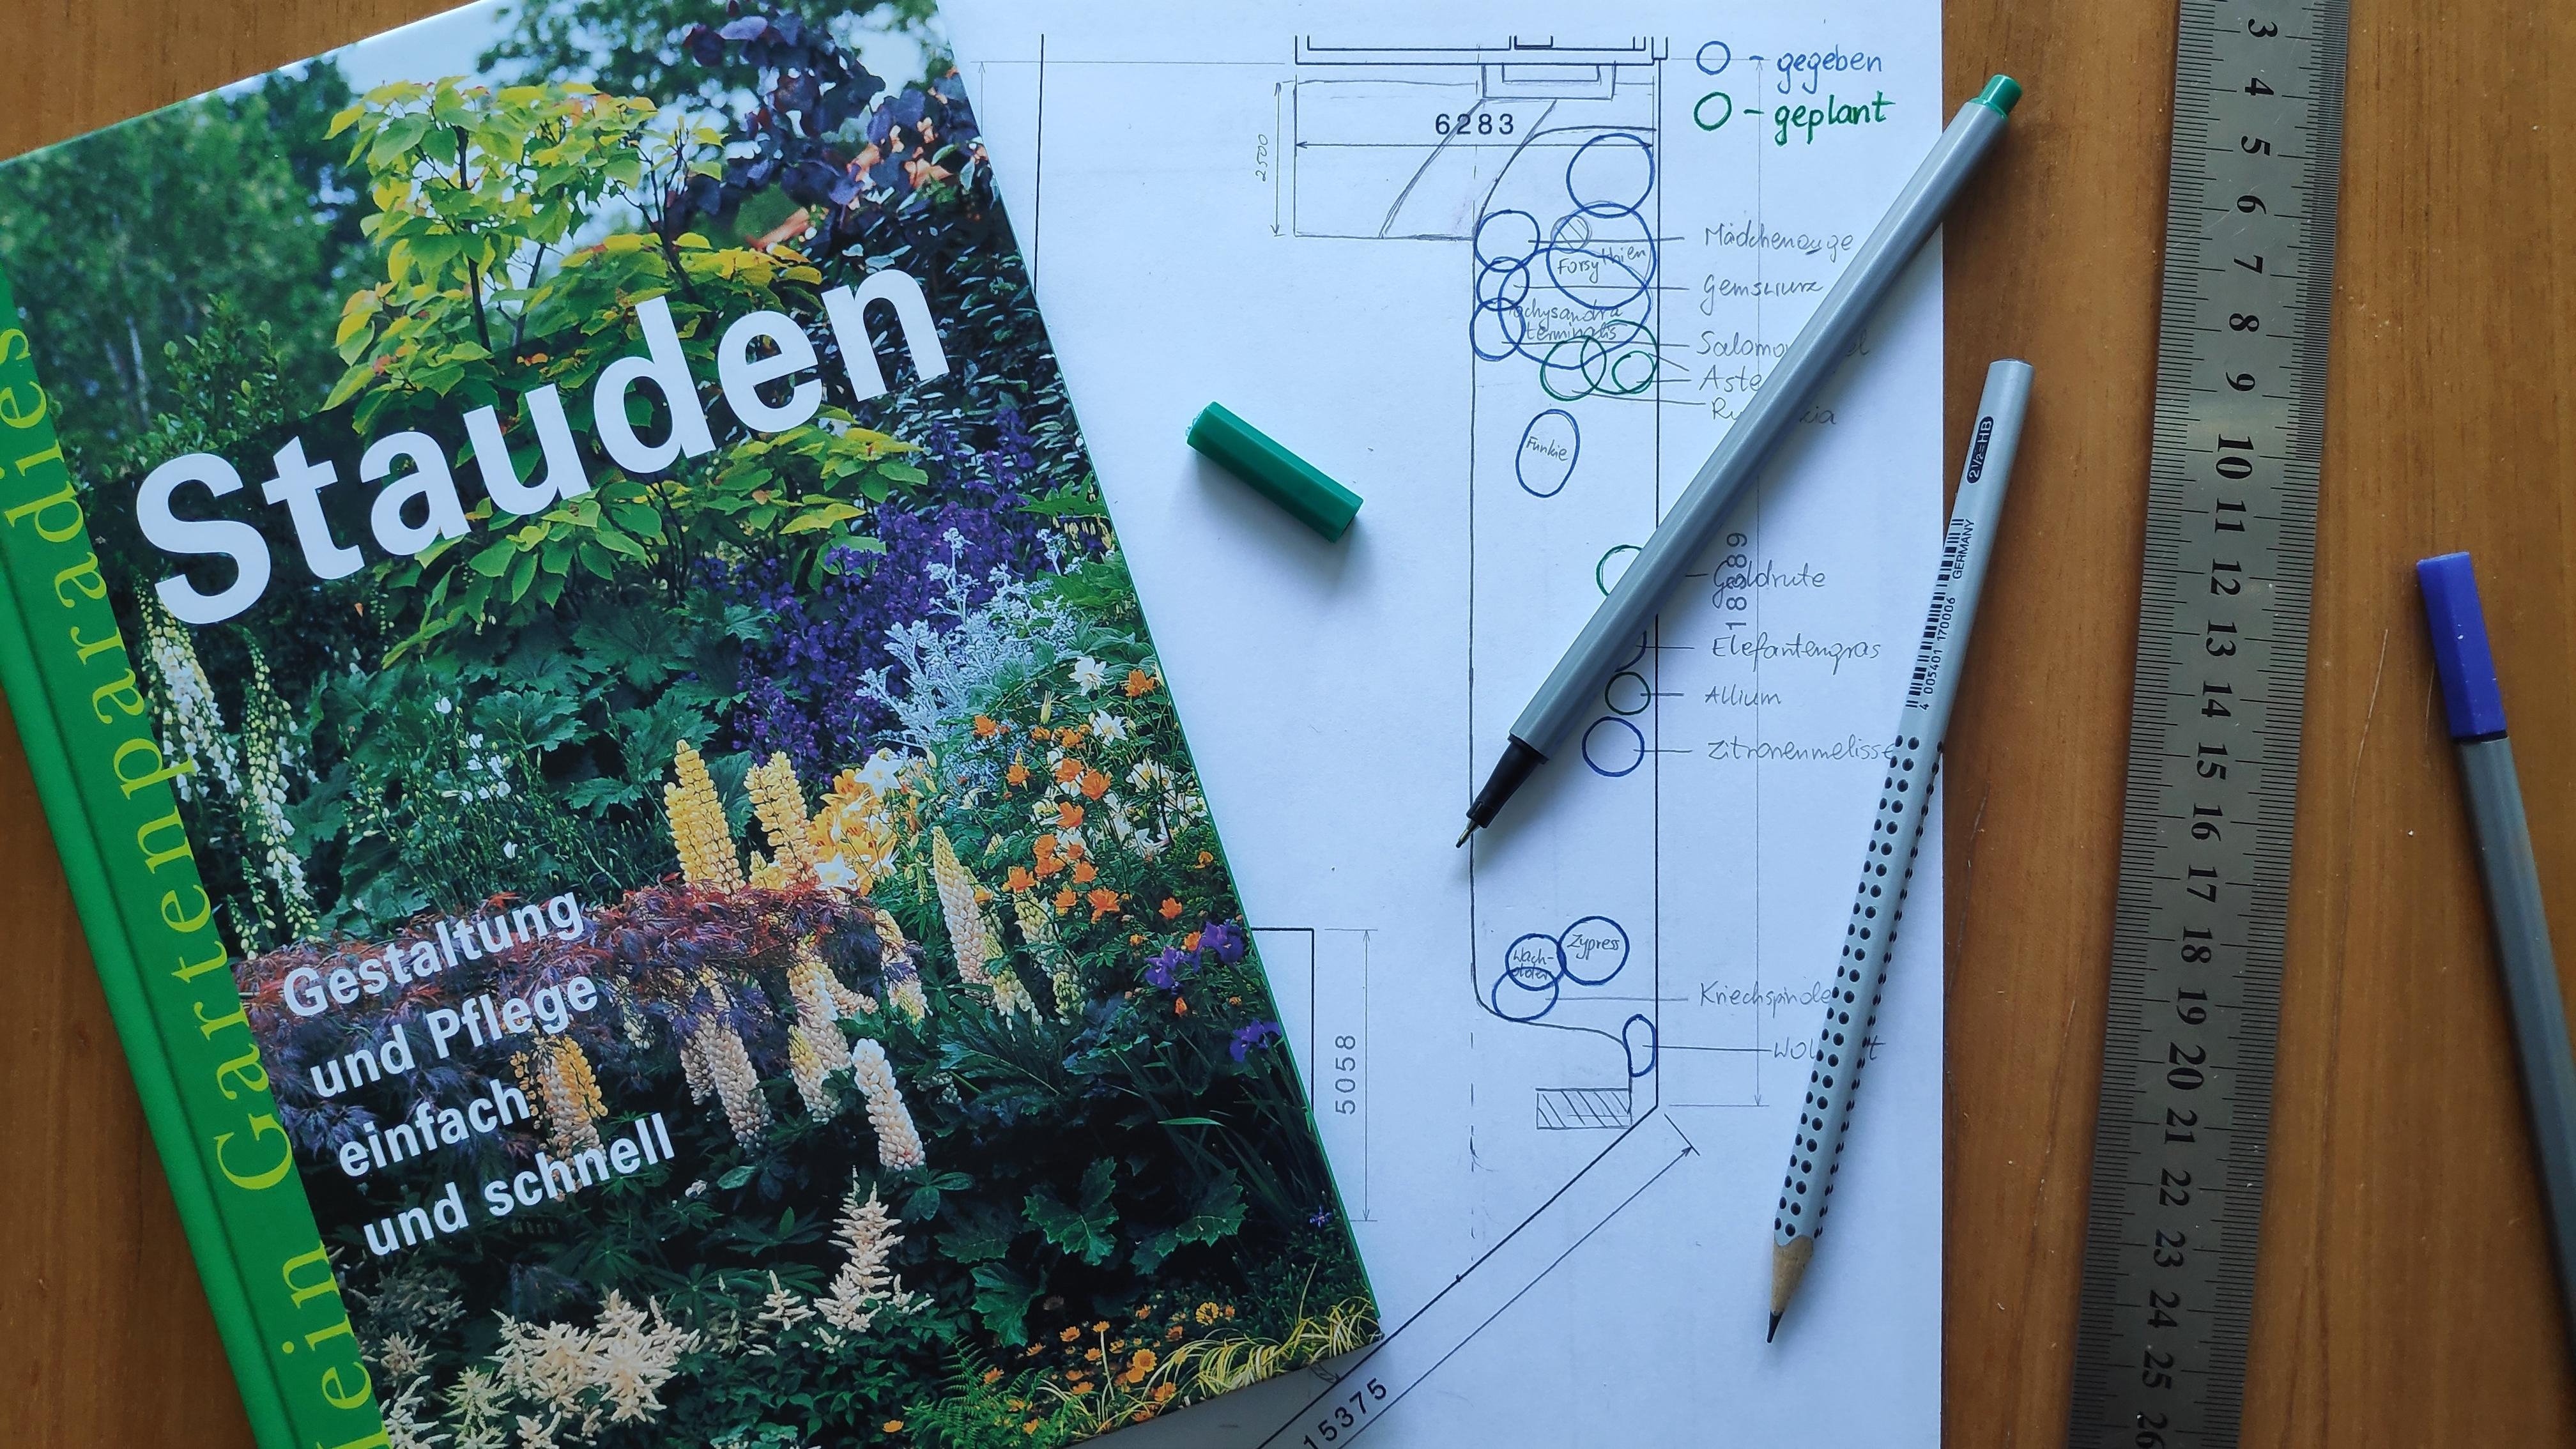 .Das gute alte Buch.
#Stauden #Planung #Gartenplanung #Gartengestaltung #Pflanzen #Experimentierfreude #StiftundPapier